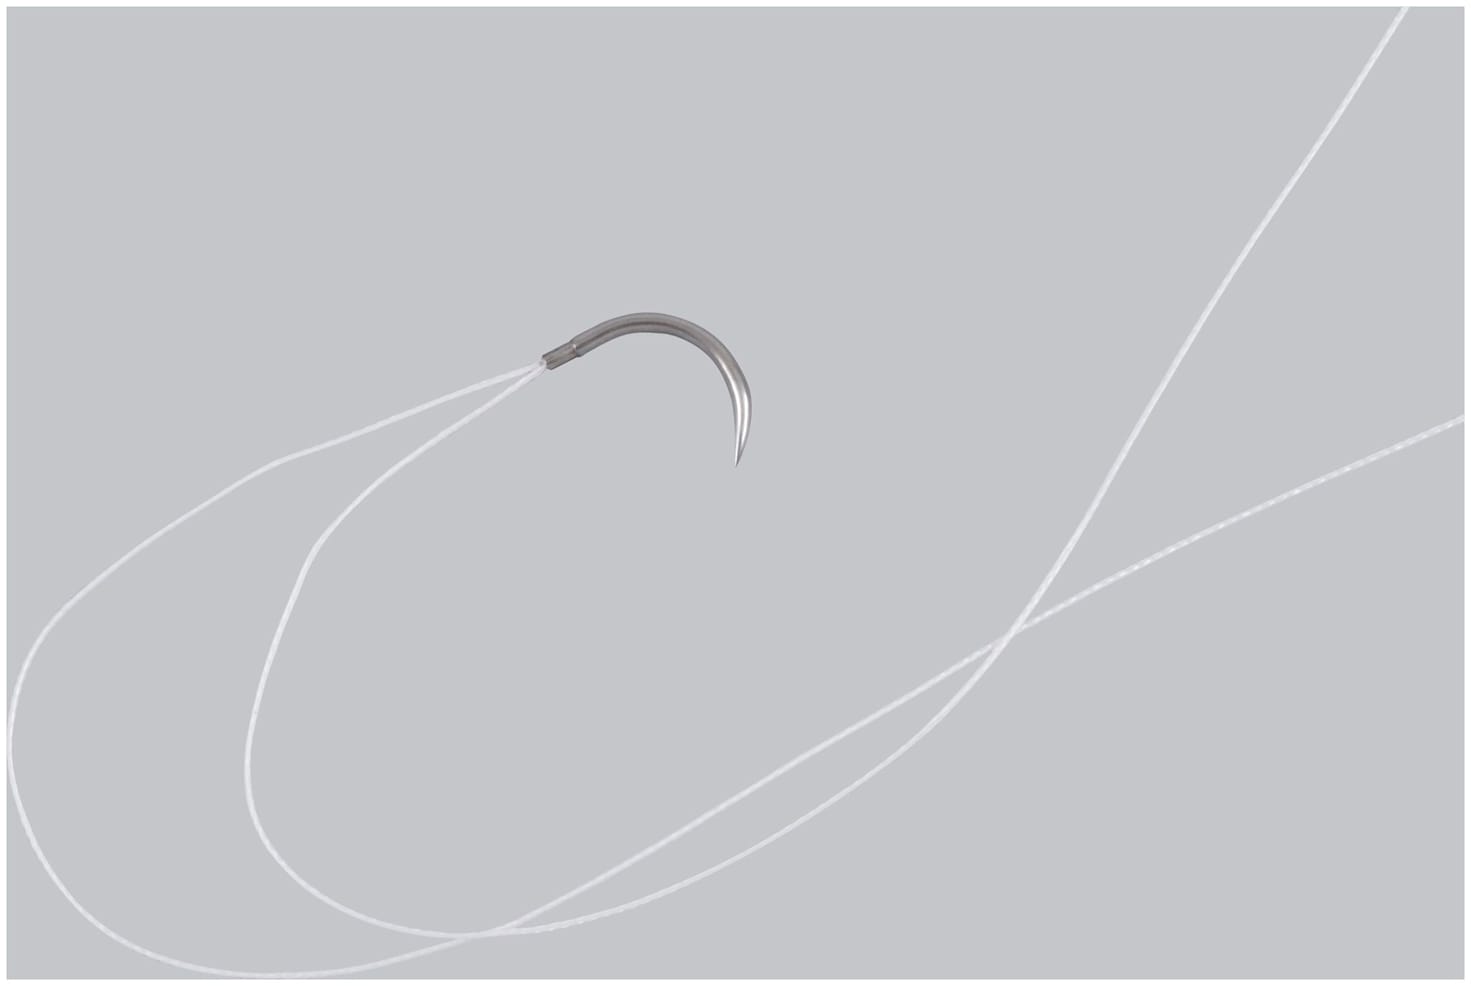 FiberLoop #4-0, 50.8 cm Geflochtener Polyblend Faden, Weiß, 20'', mit spitzer Rundnadel, steril